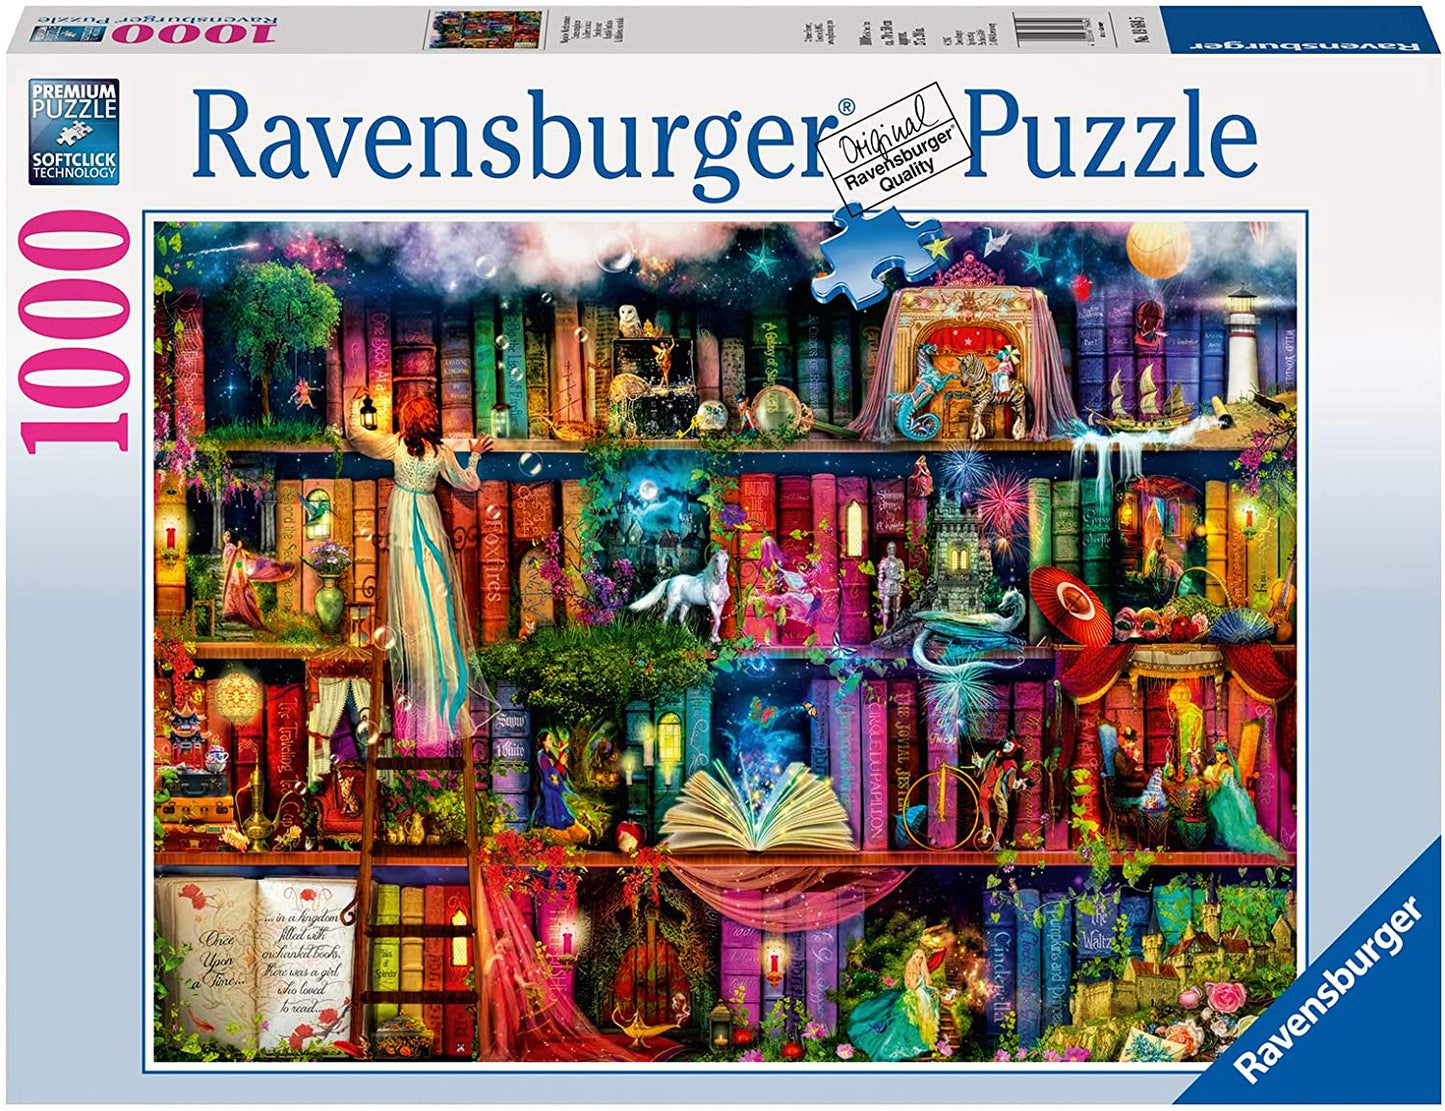 Fairytale Fantasia by Aimee Stewart, 1000 Piece Puzzle